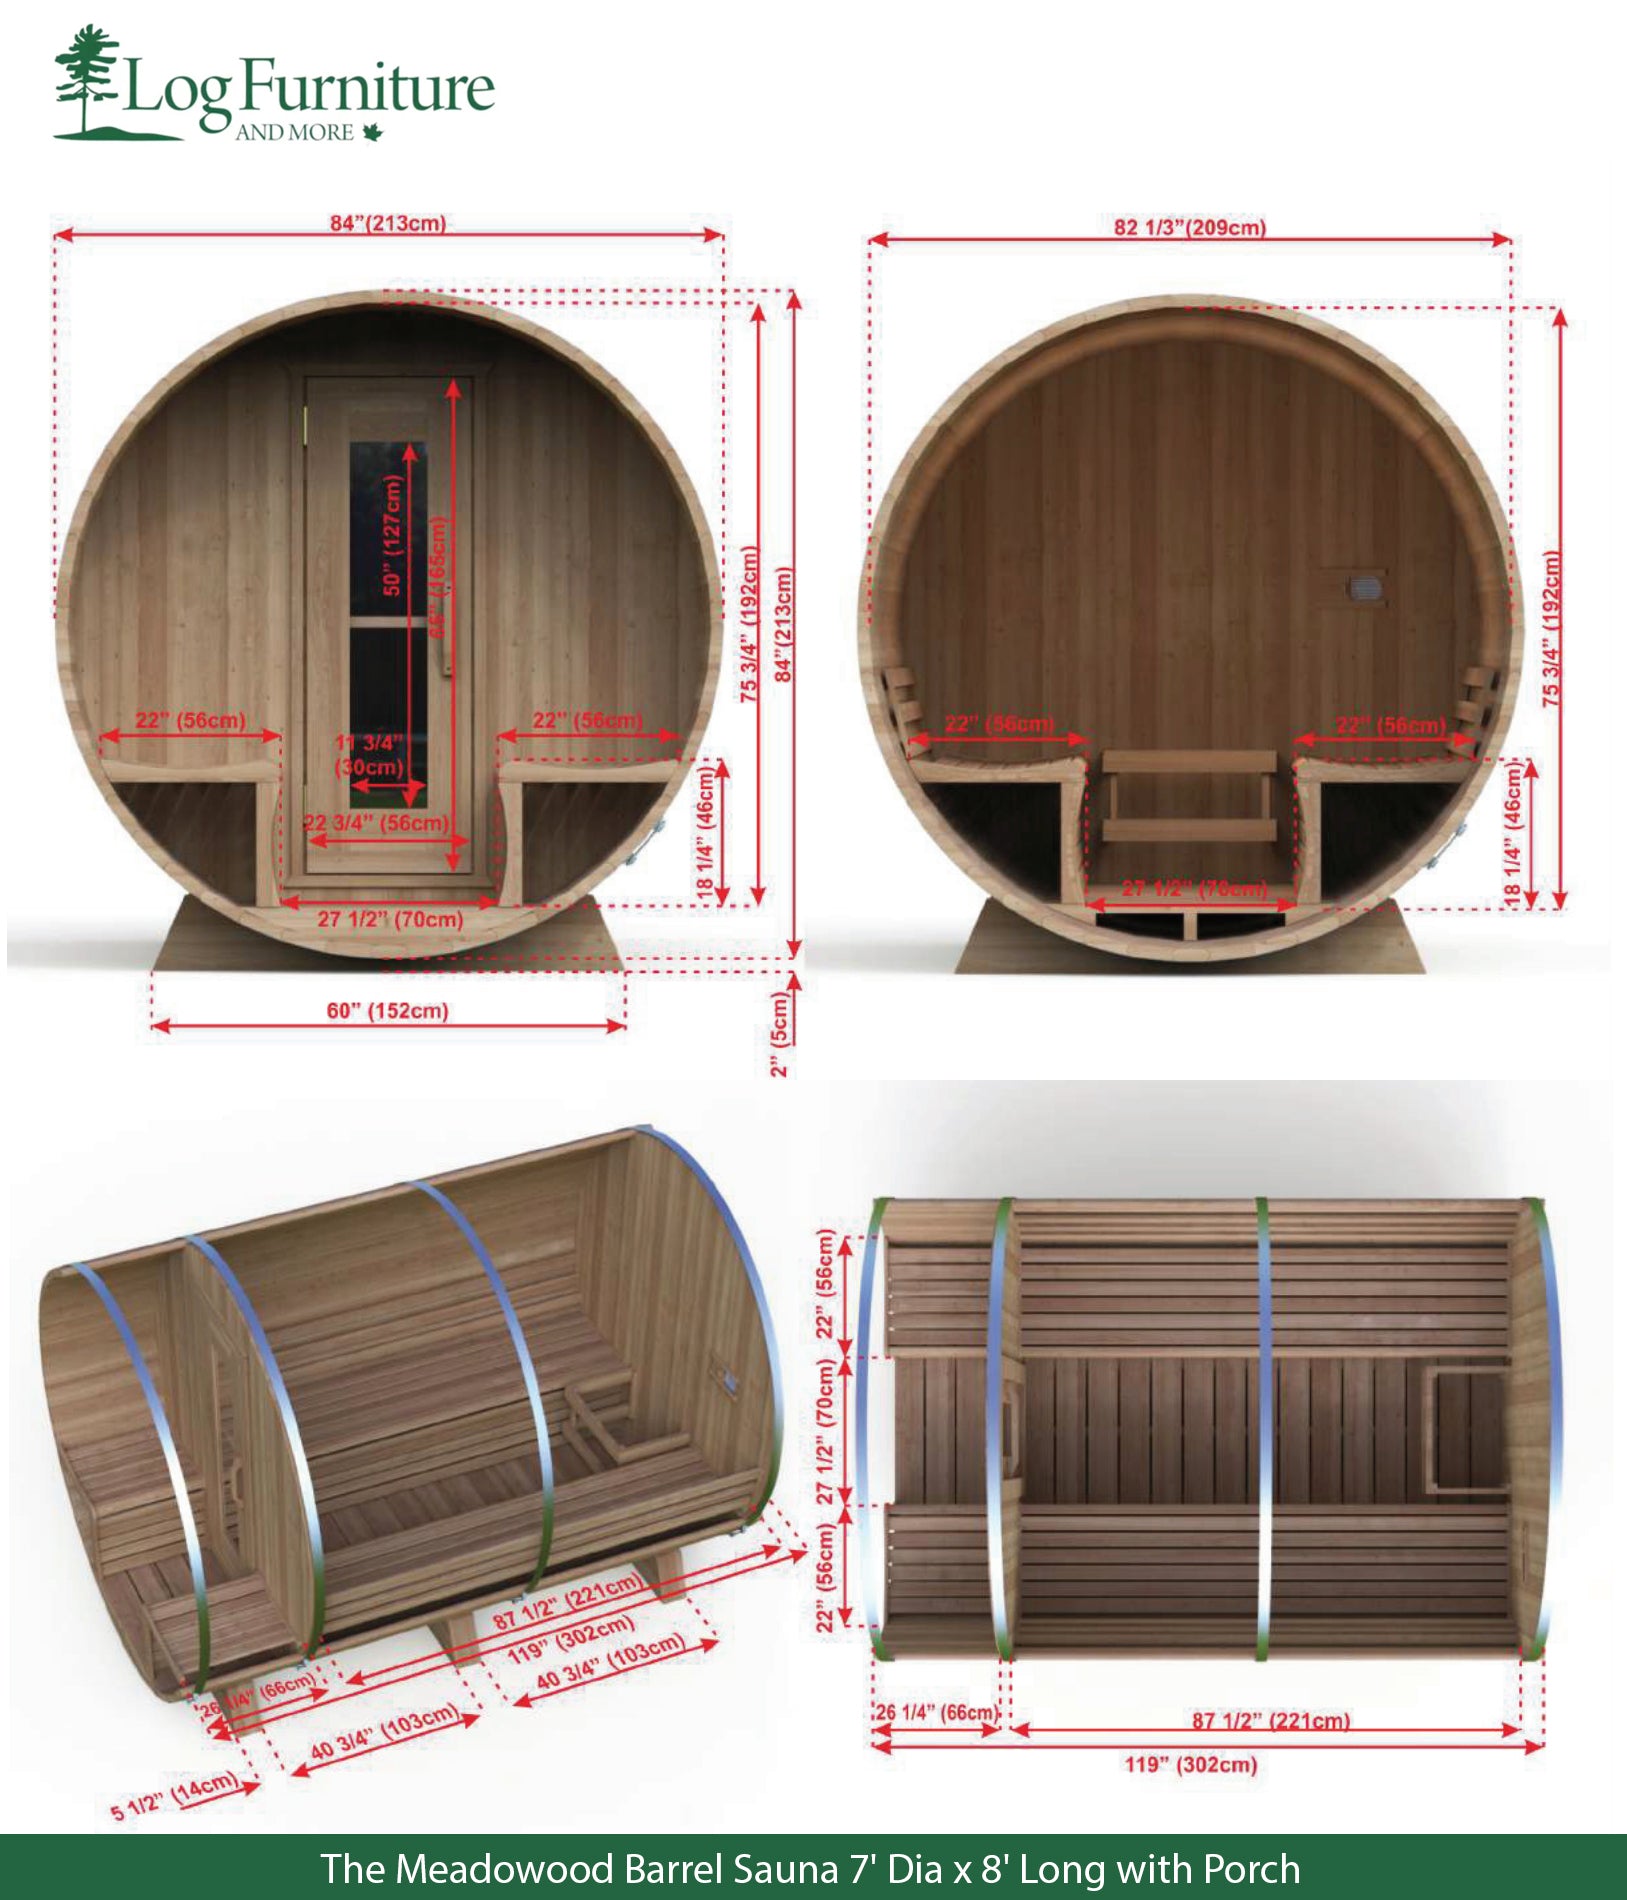 The Meadowood Barrel Sauna - 7' Dia x 8' Long with Porch